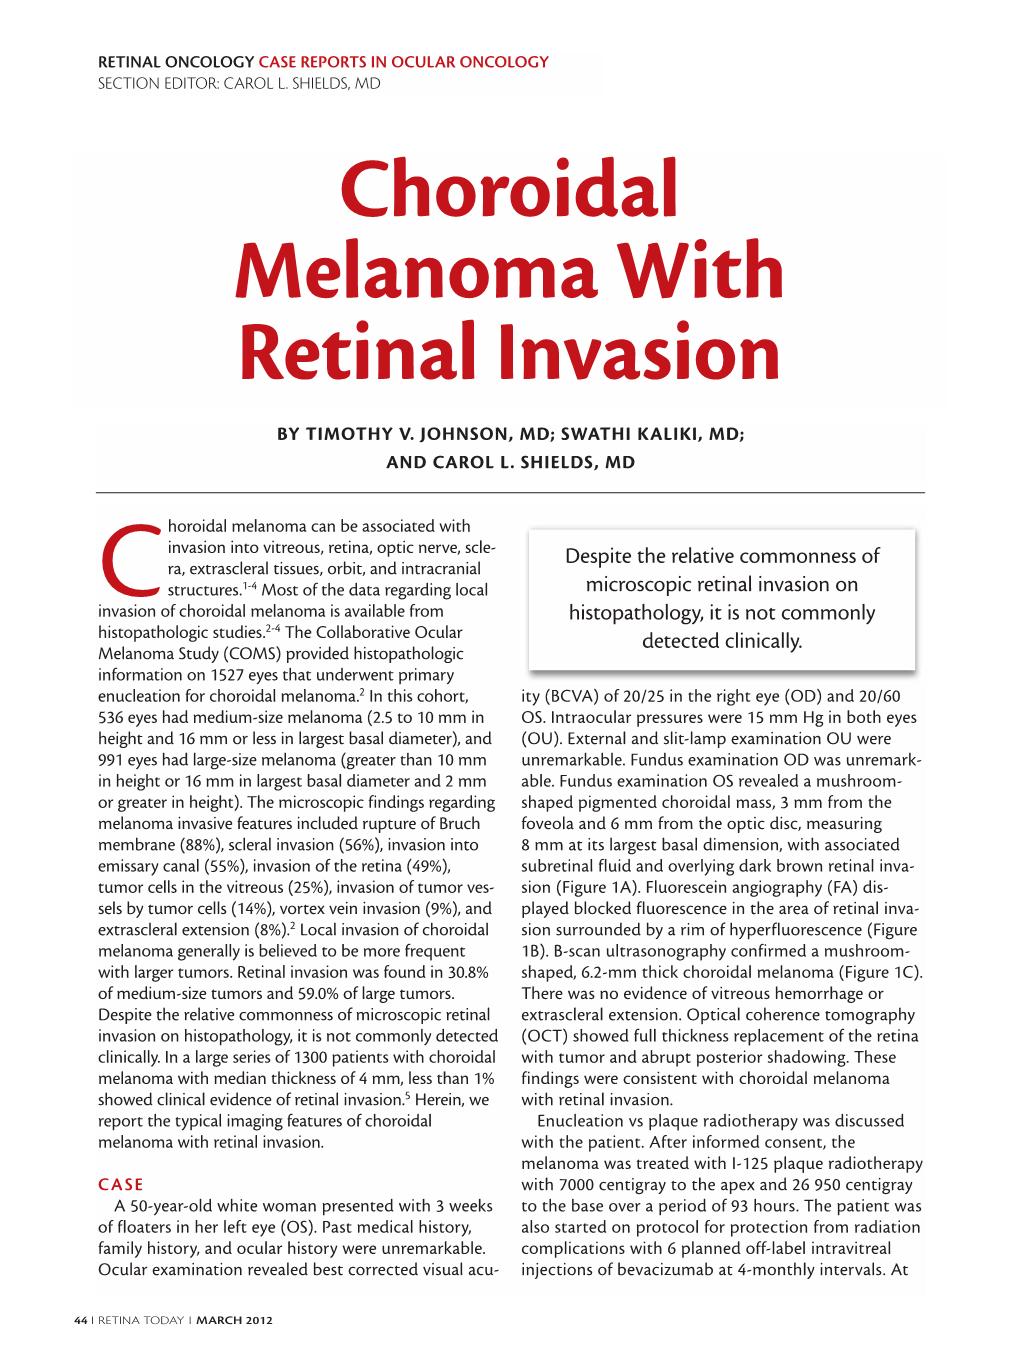 Choroidal Melanoma with Retinal Invasion